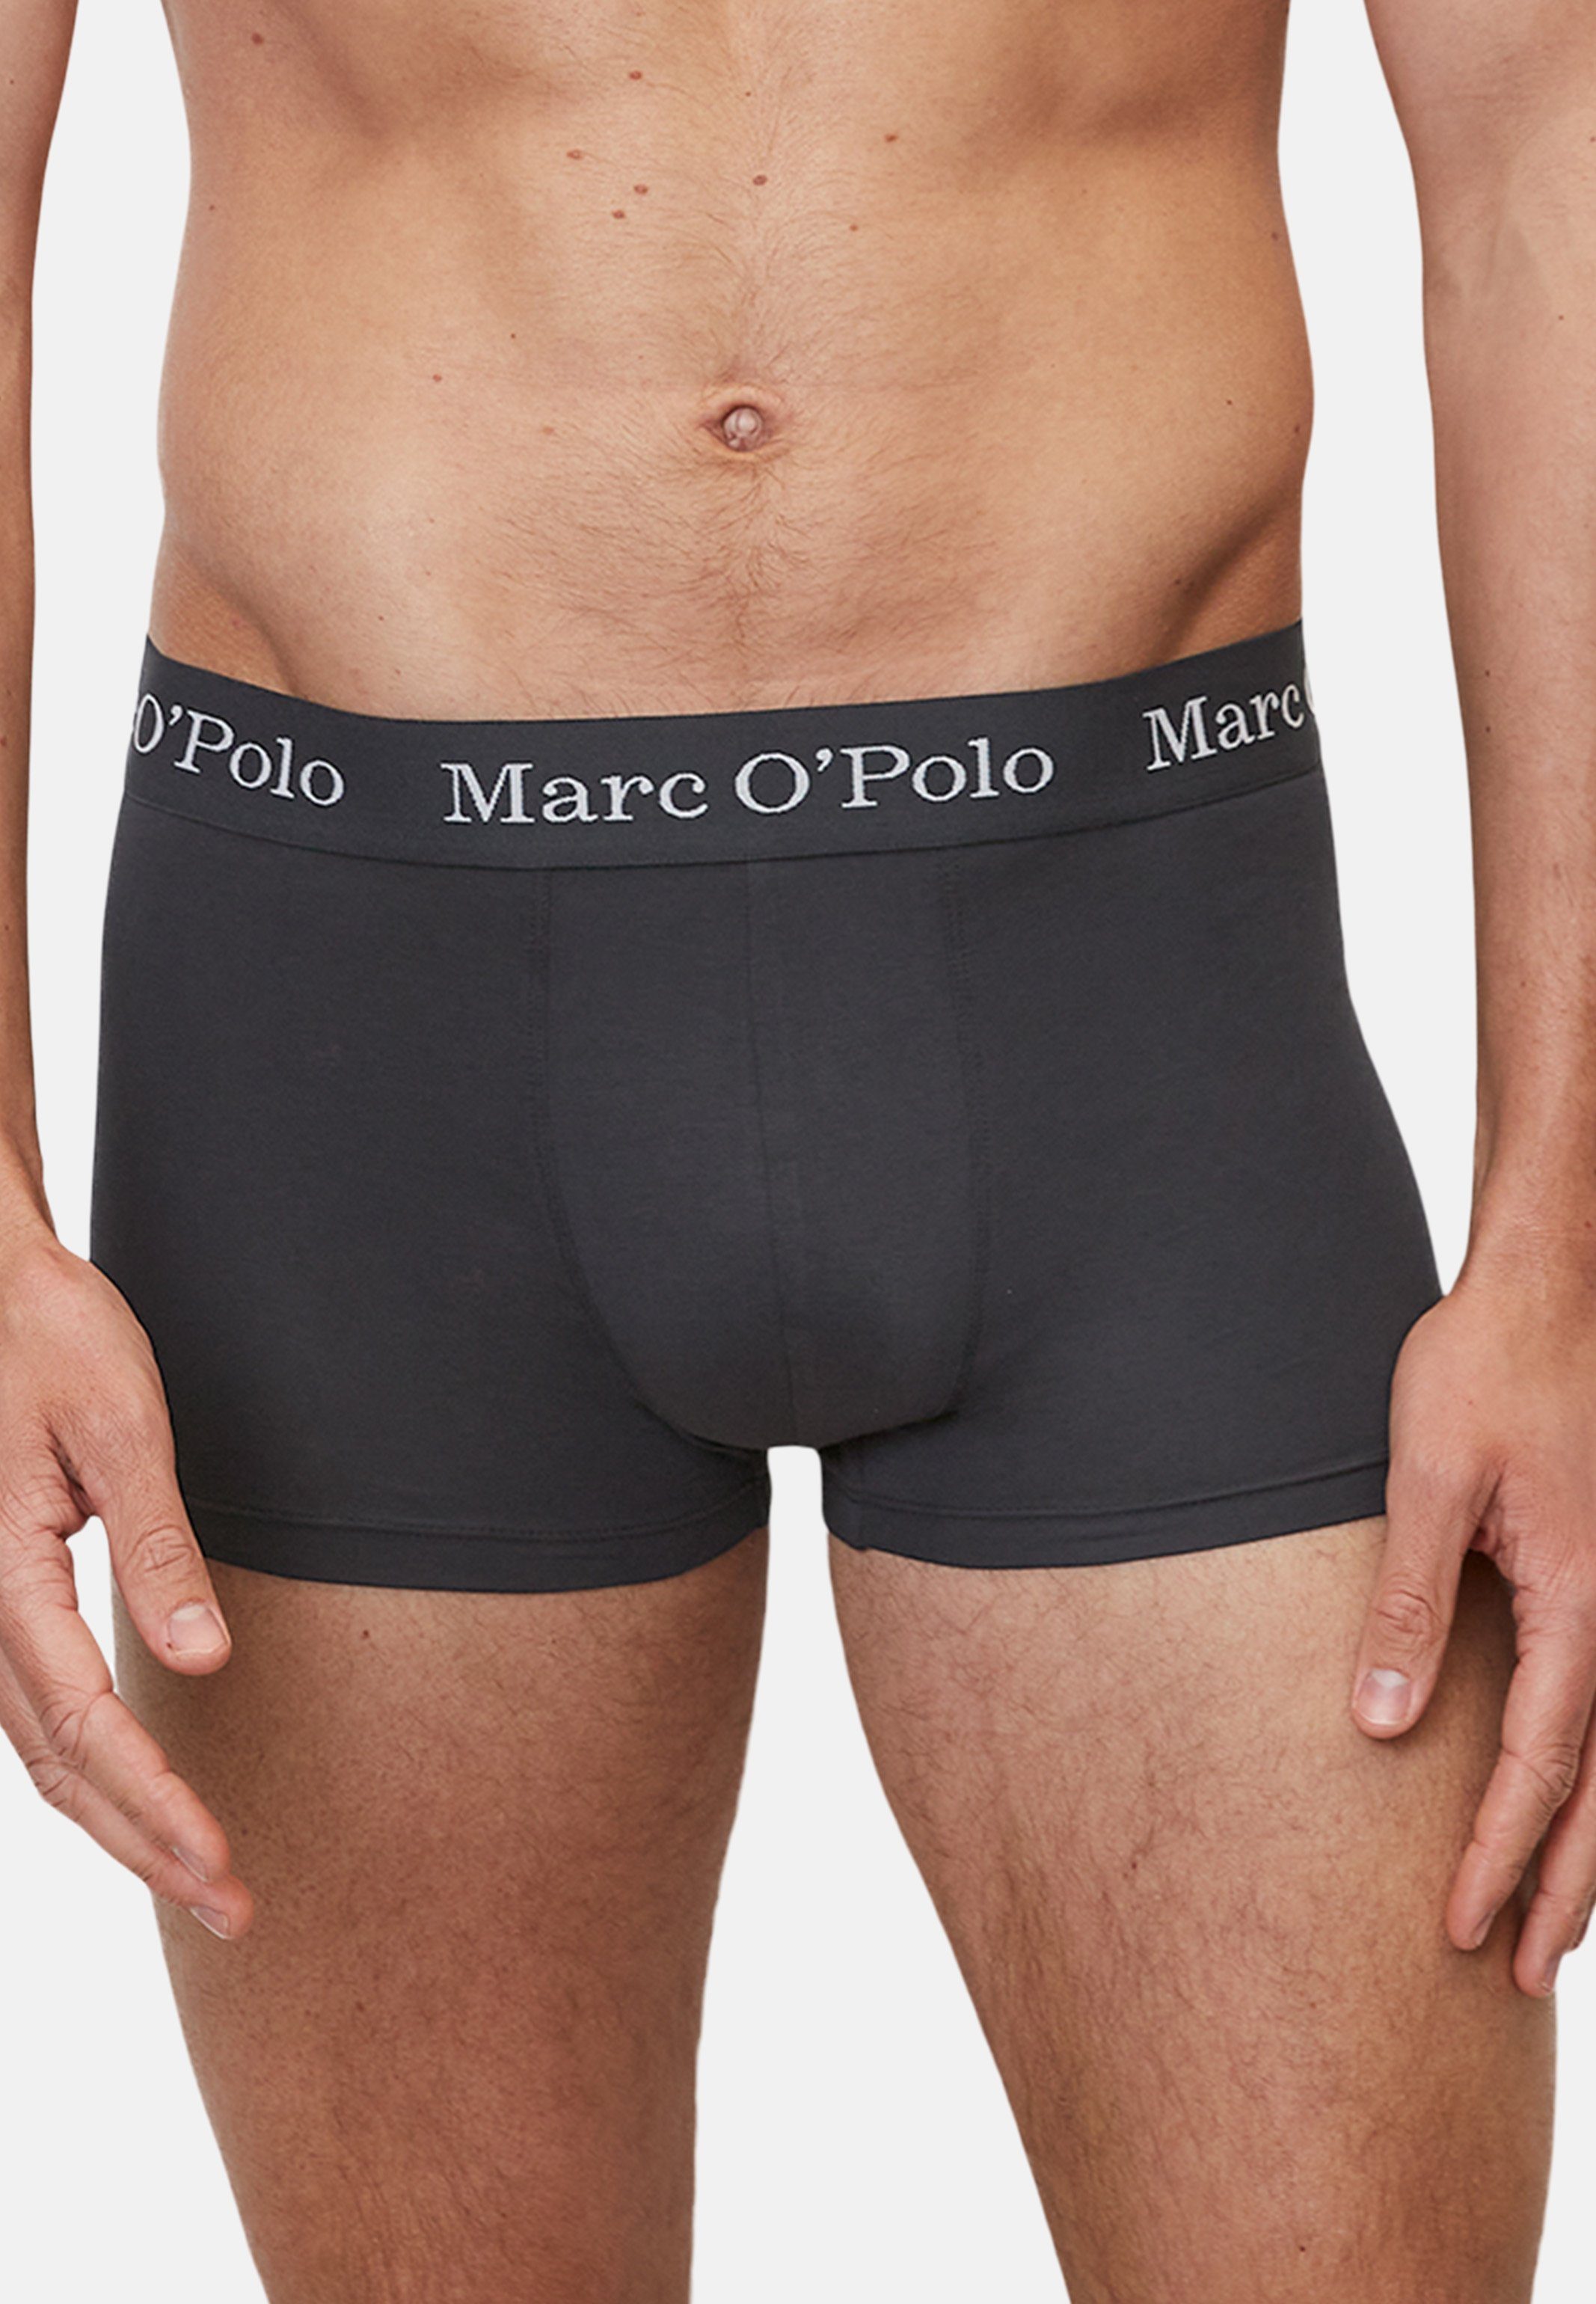 O'Polo Boxer 6er Cotton 6-St) Pant Retro - Pack Elements Baumwolle Retro Melange Ohne Organic - Short - Eingriff (Spar-Set, Black/Navy/Grey / Marc